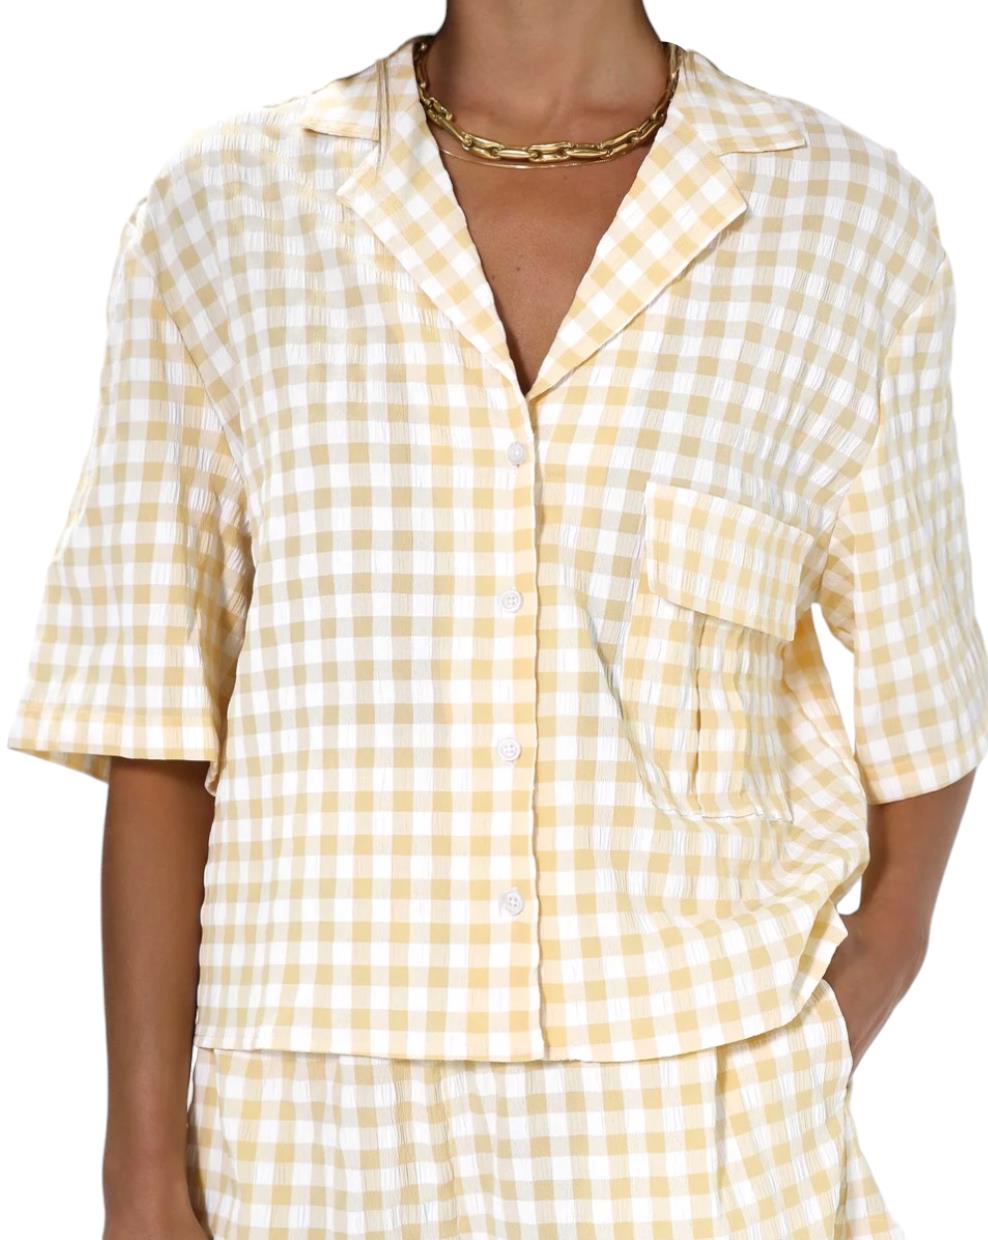 Madison The Label Gingham Shirt | Sz XS, Short Sleeve, Relaxed, Beige/White